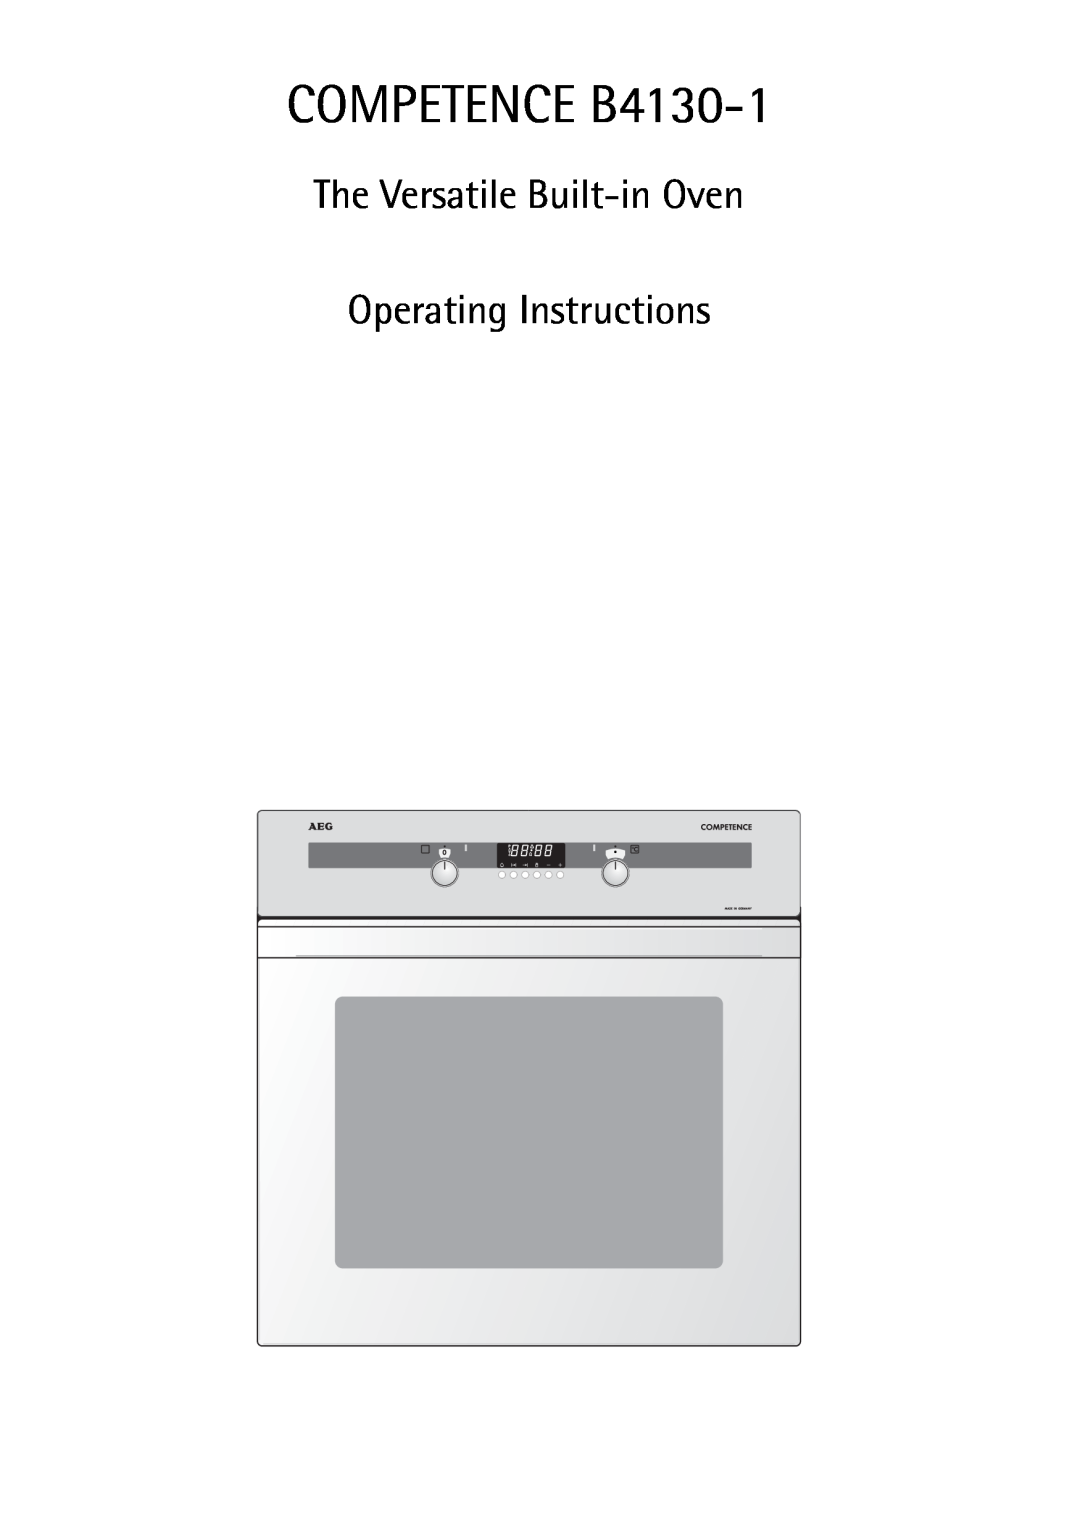 AEG operating instructions The Versatile Built-inOven Operating Instructions, COMPETENCE B4130-1 